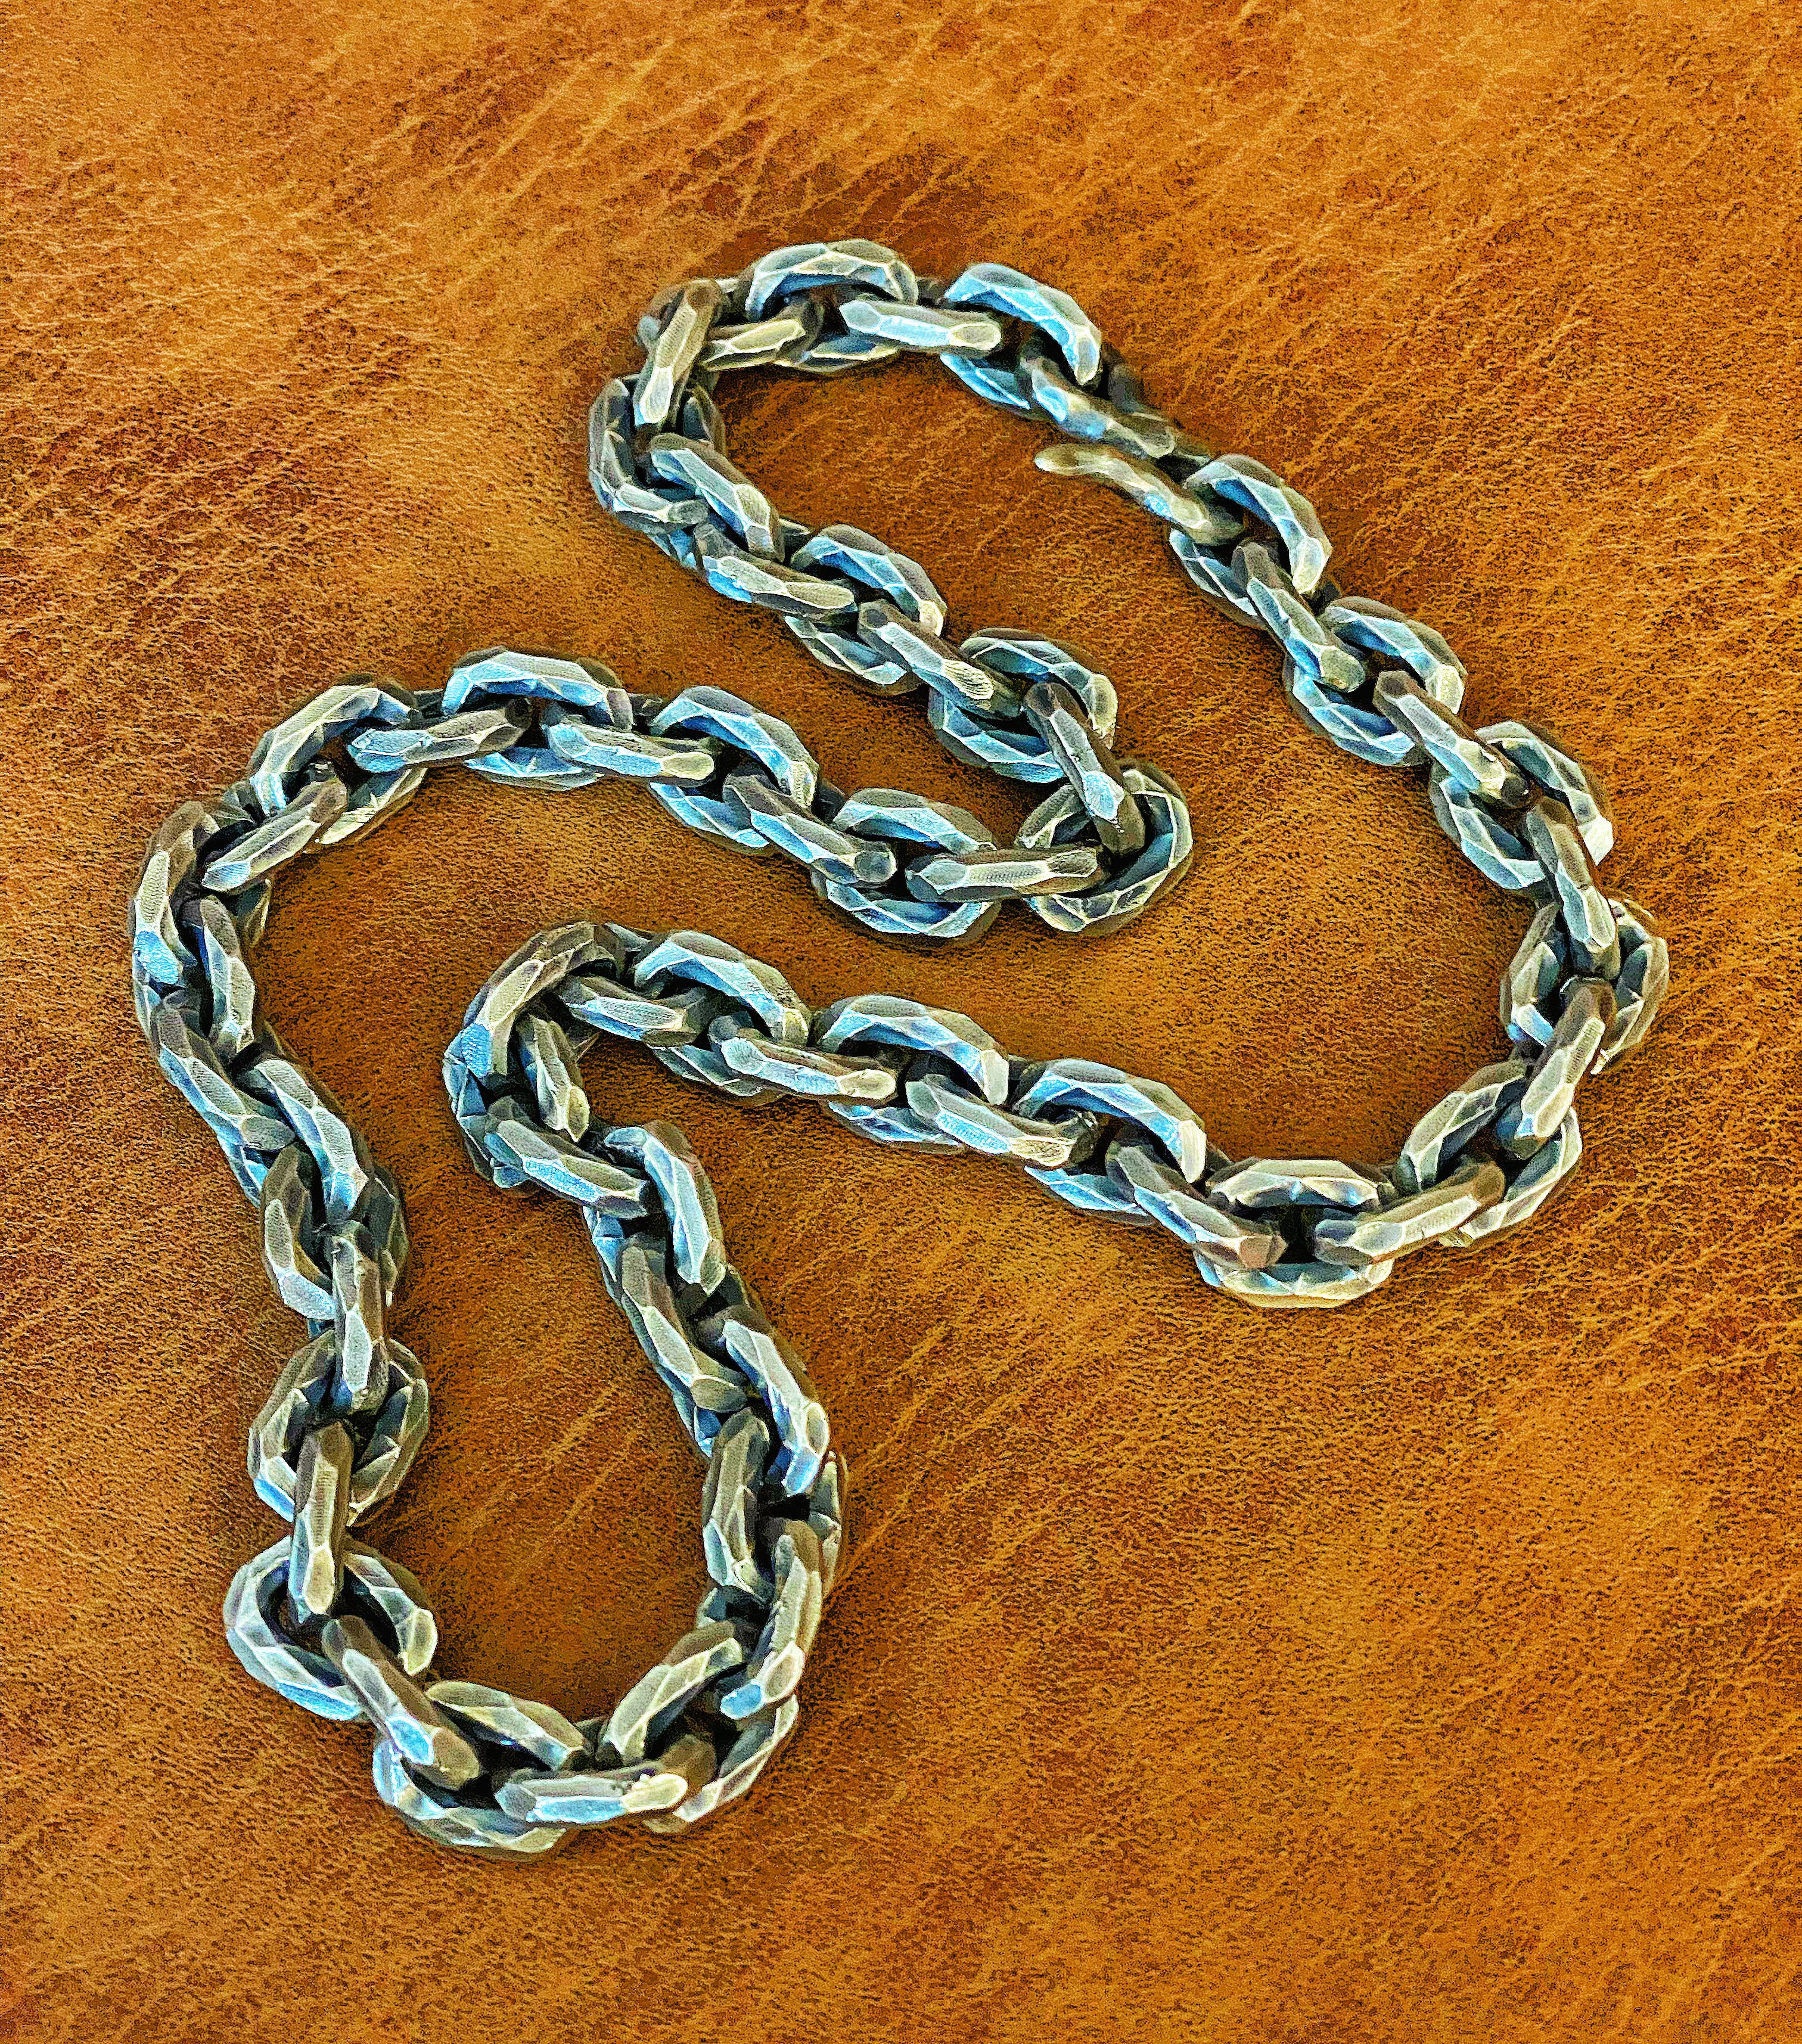 11mm Hammered Silver Necklace Chain (Item No. N0003) Tartaria Onlinestore